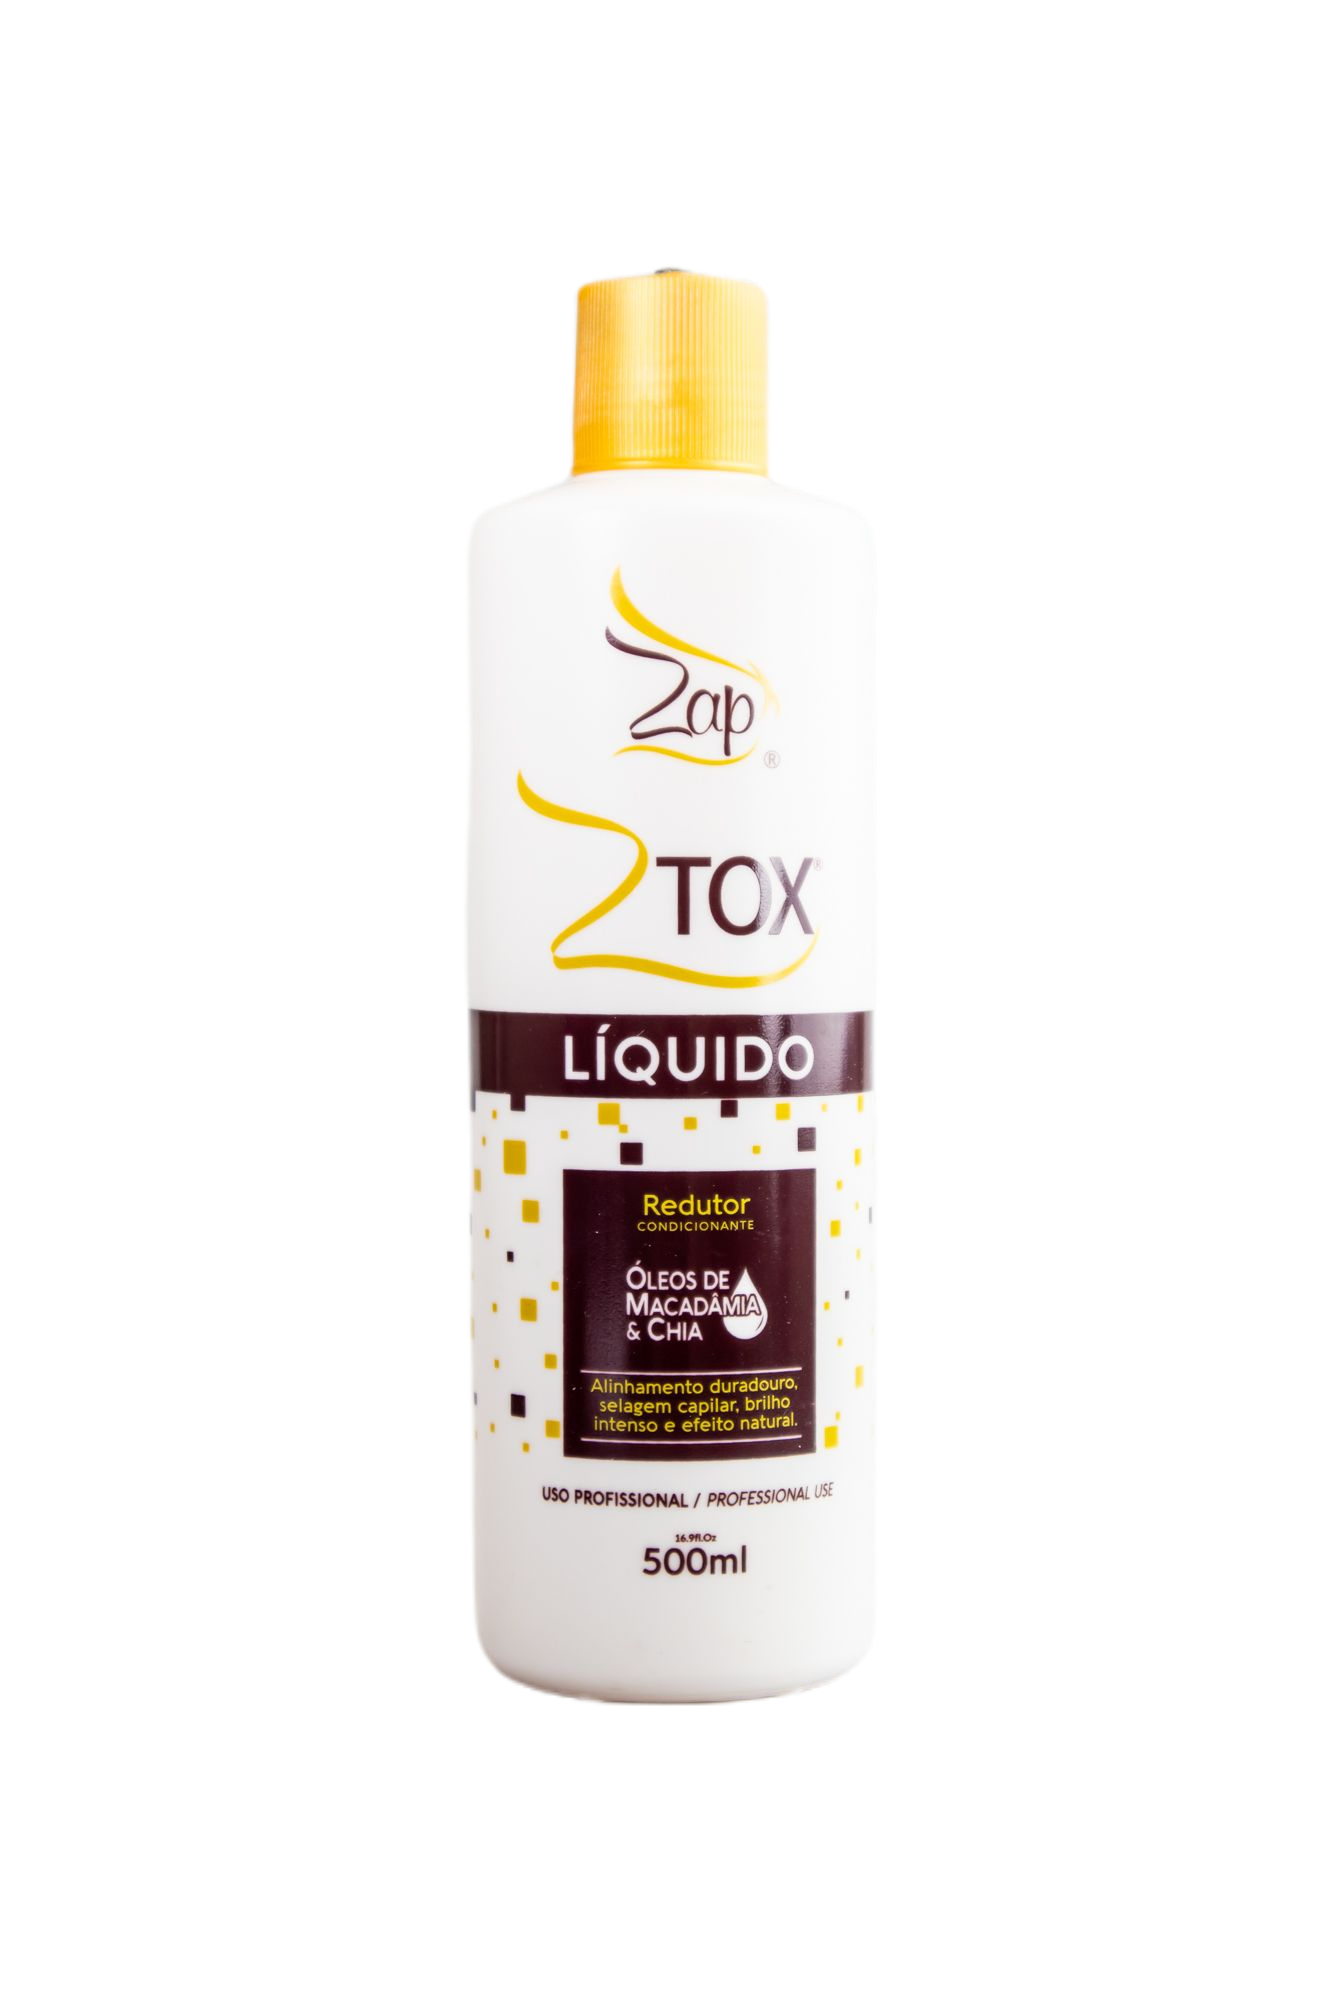 Zap Cosmetics Brazilian Keratin Treatment Zap Ztox Conditioning Reducer Liquid Macadamia and Chia 500ml - Zap Cosmetics